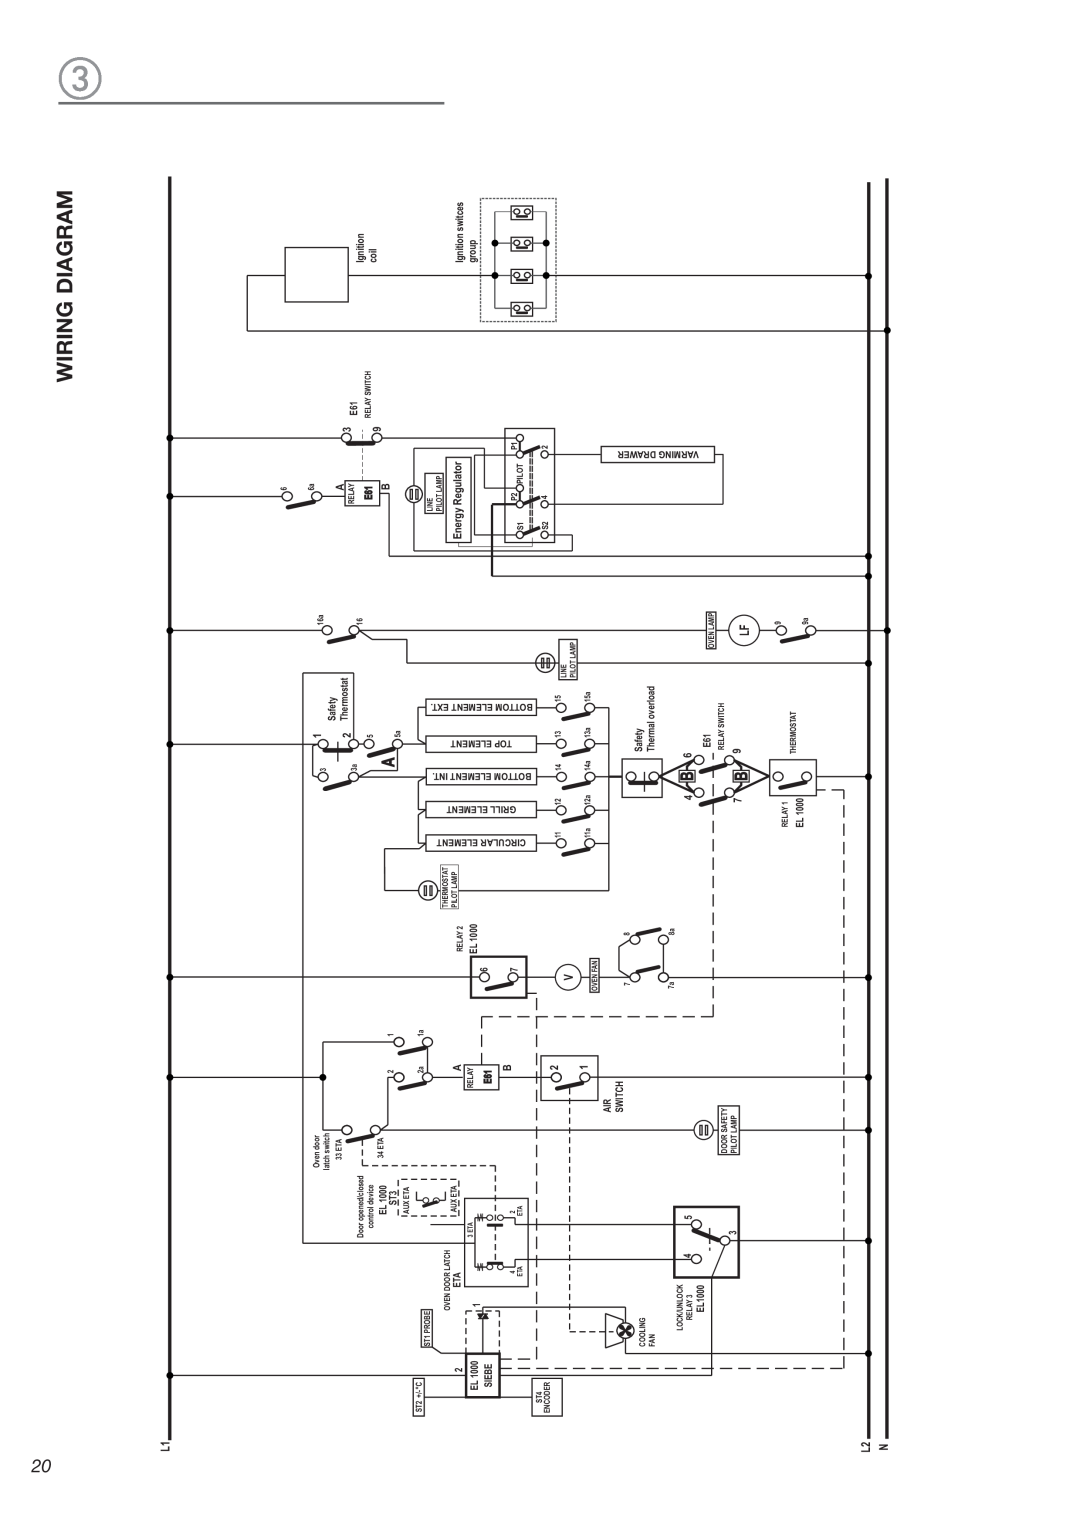 DeLonghi DEGESC24SS installation instructions Wiring Diagram, Circularelement 